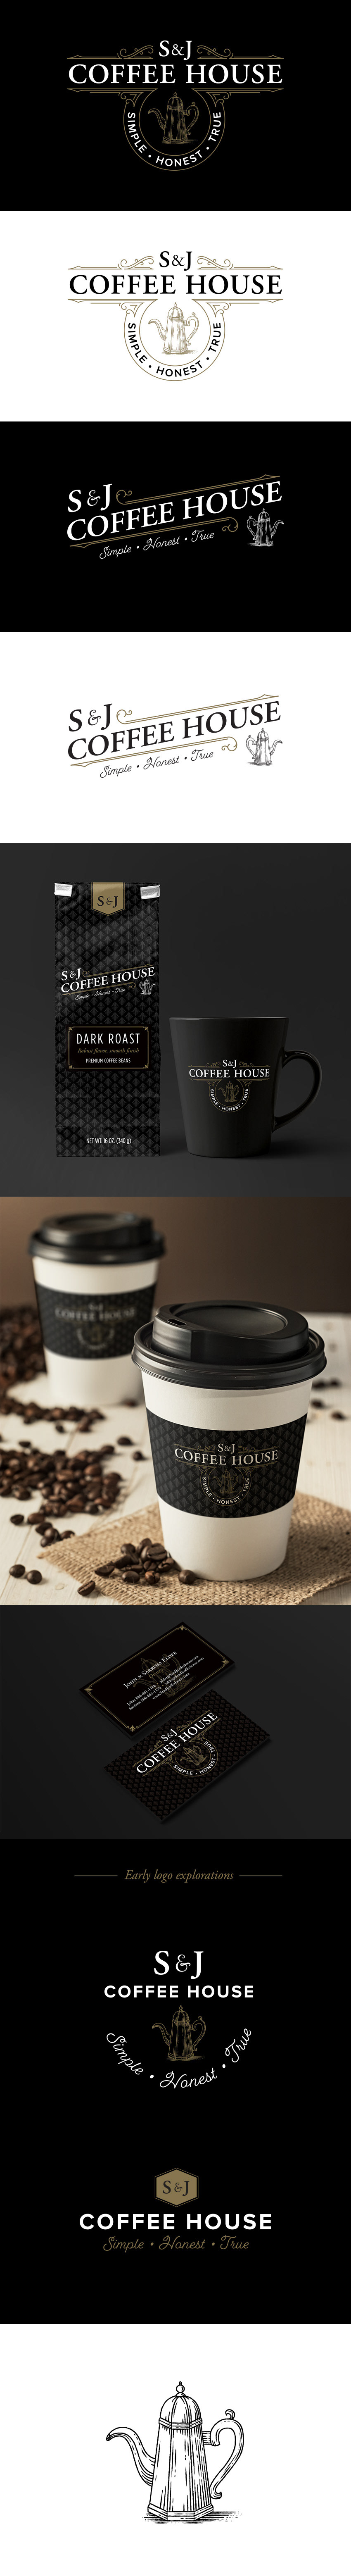 Mg Design Graphic Design Illustration S J Coffee House